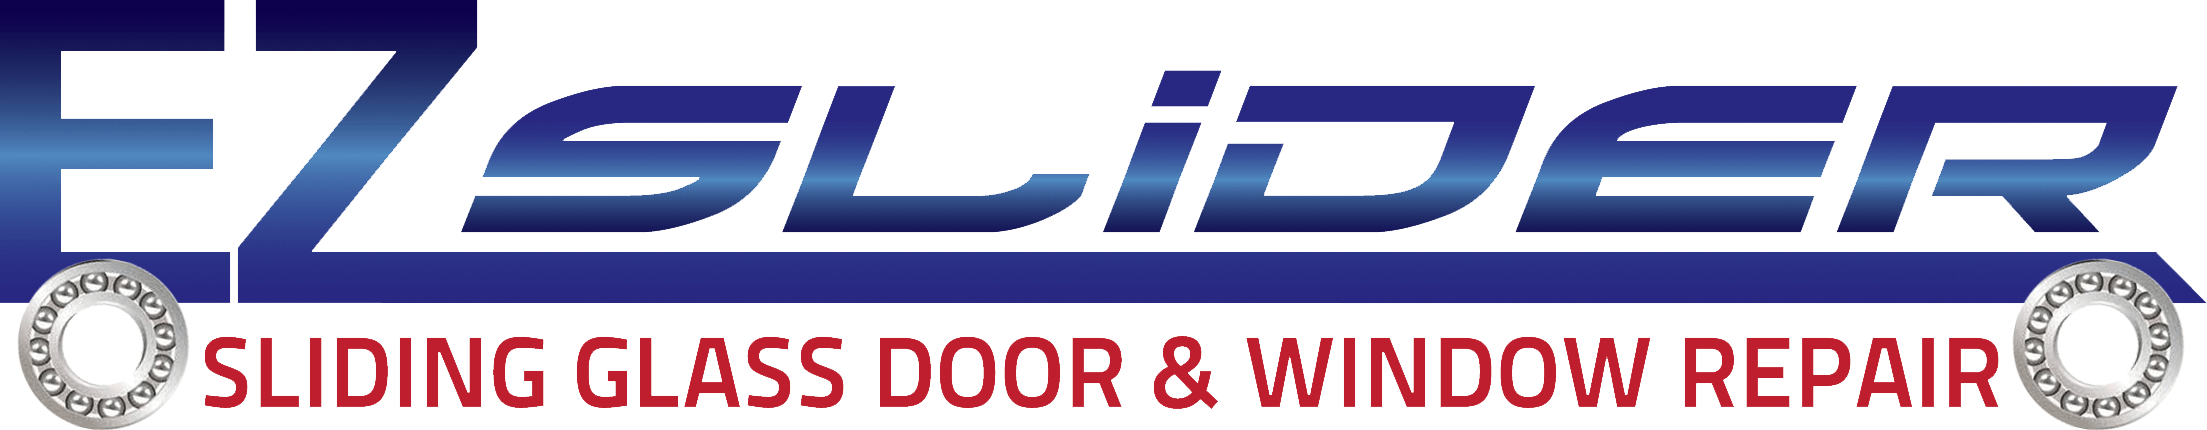 ez slider window repair logo